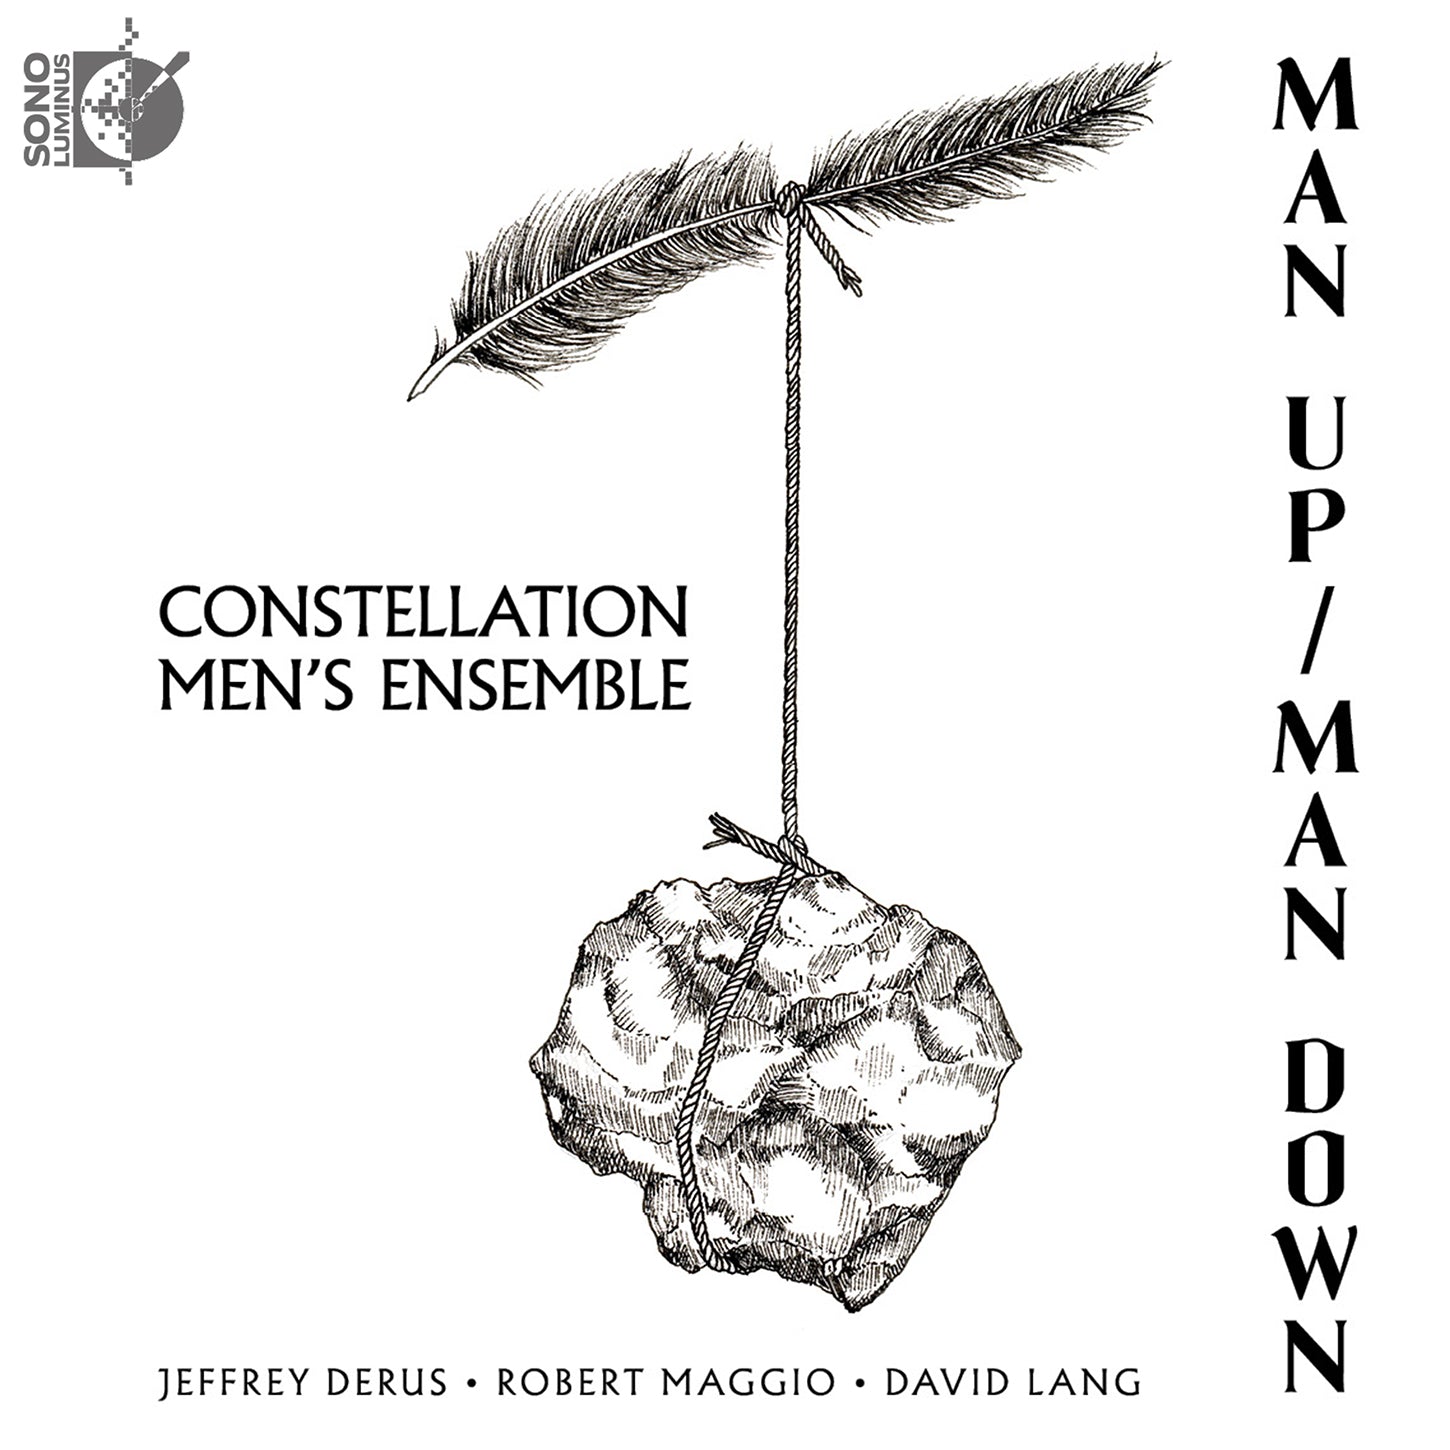 Man Up | Man Down / Constellation Men's Ensemble